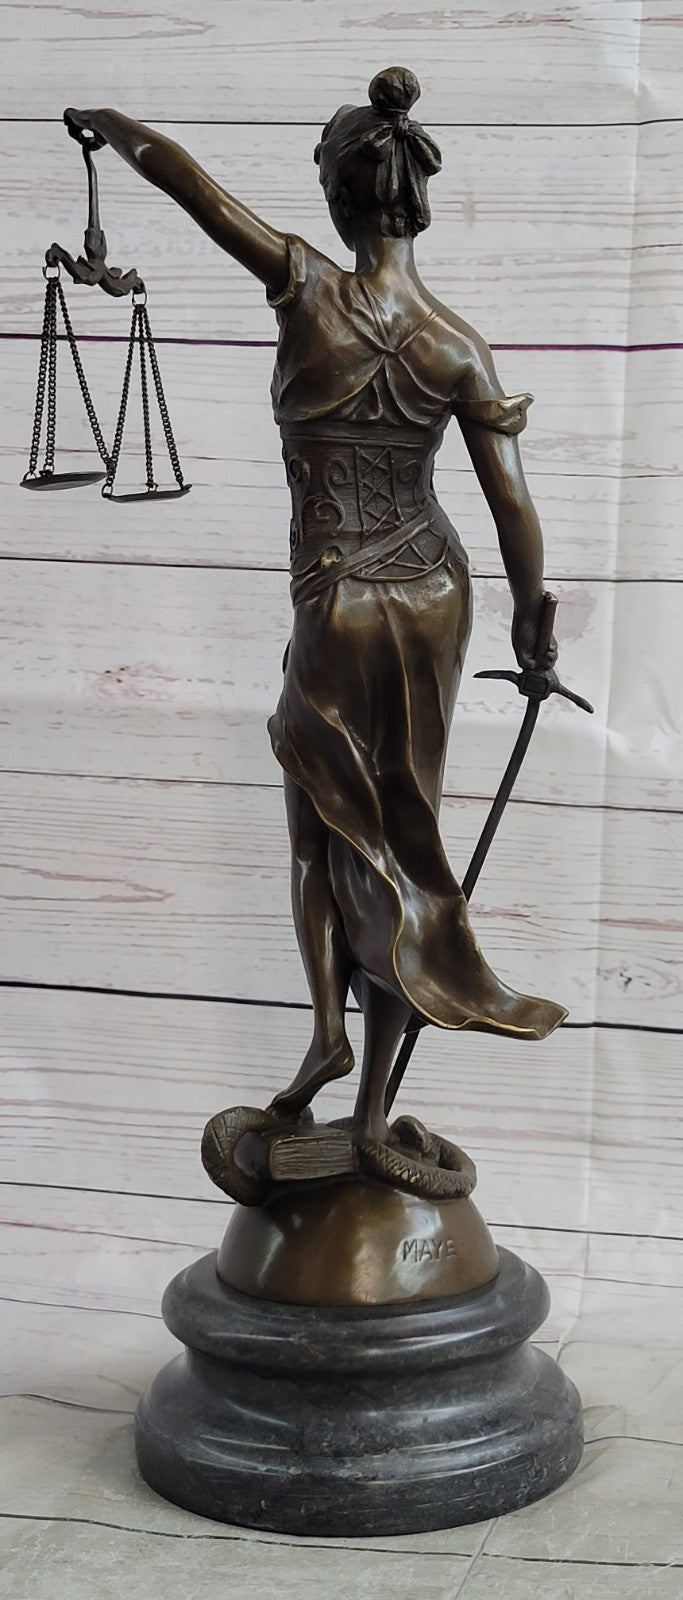 18" Tall BRONZE BLIND JUSTICE LAW MARBLE STATUE LADY SCALE Sculpture Nouveau Art